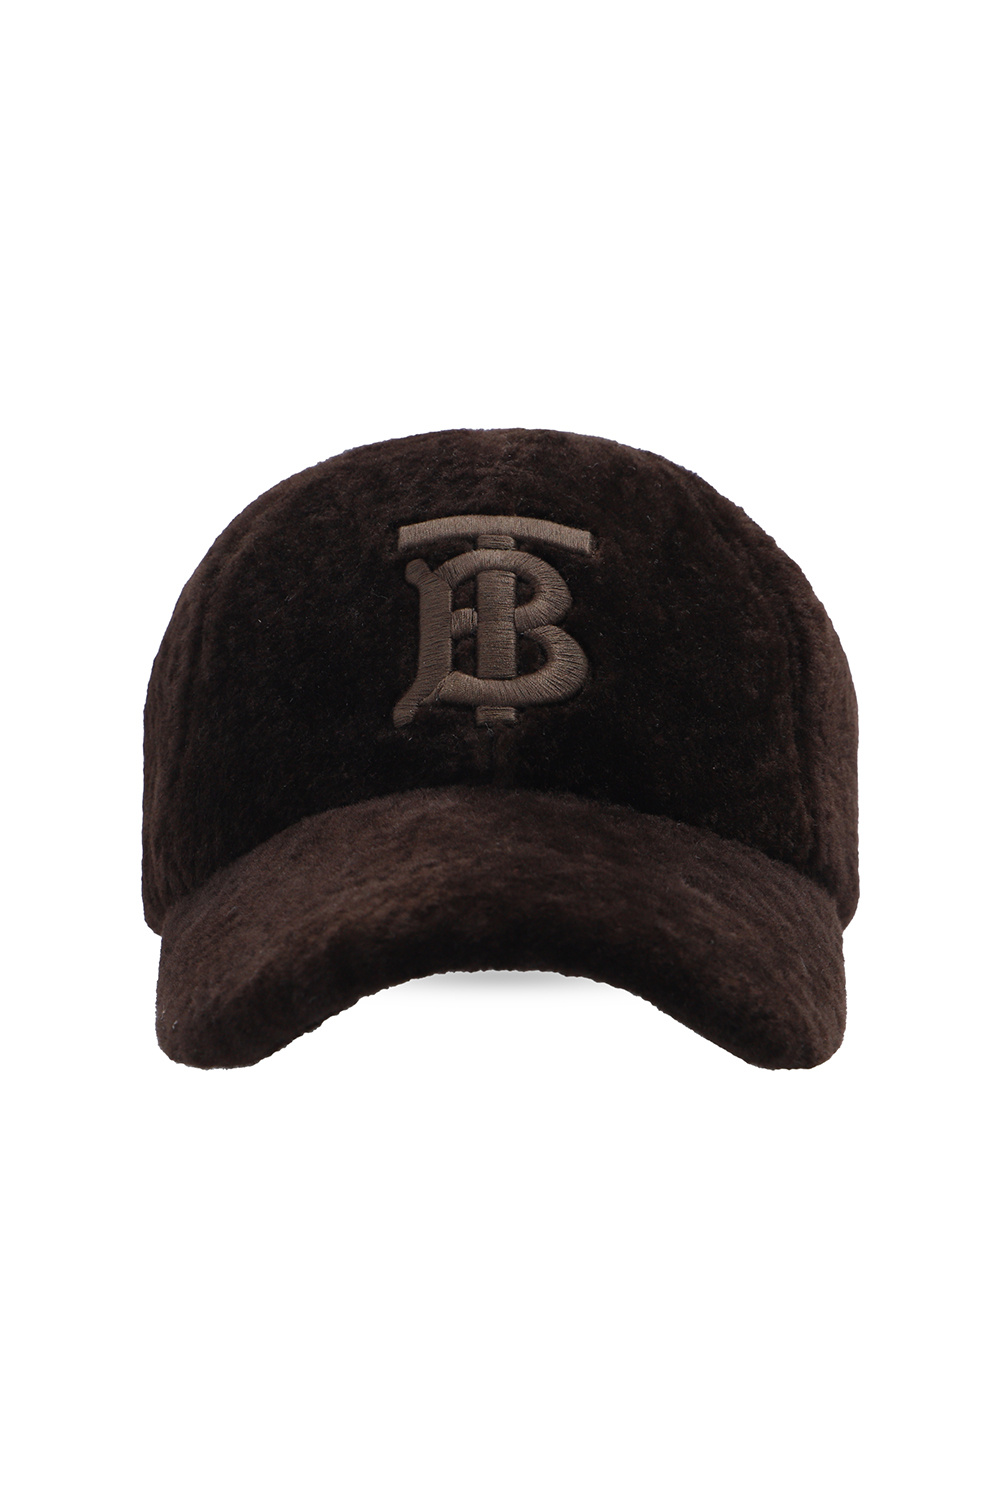 Burberry Fur baseball cap | hat with false peak burberry hat black white |  IetpShops | Men's Accessories